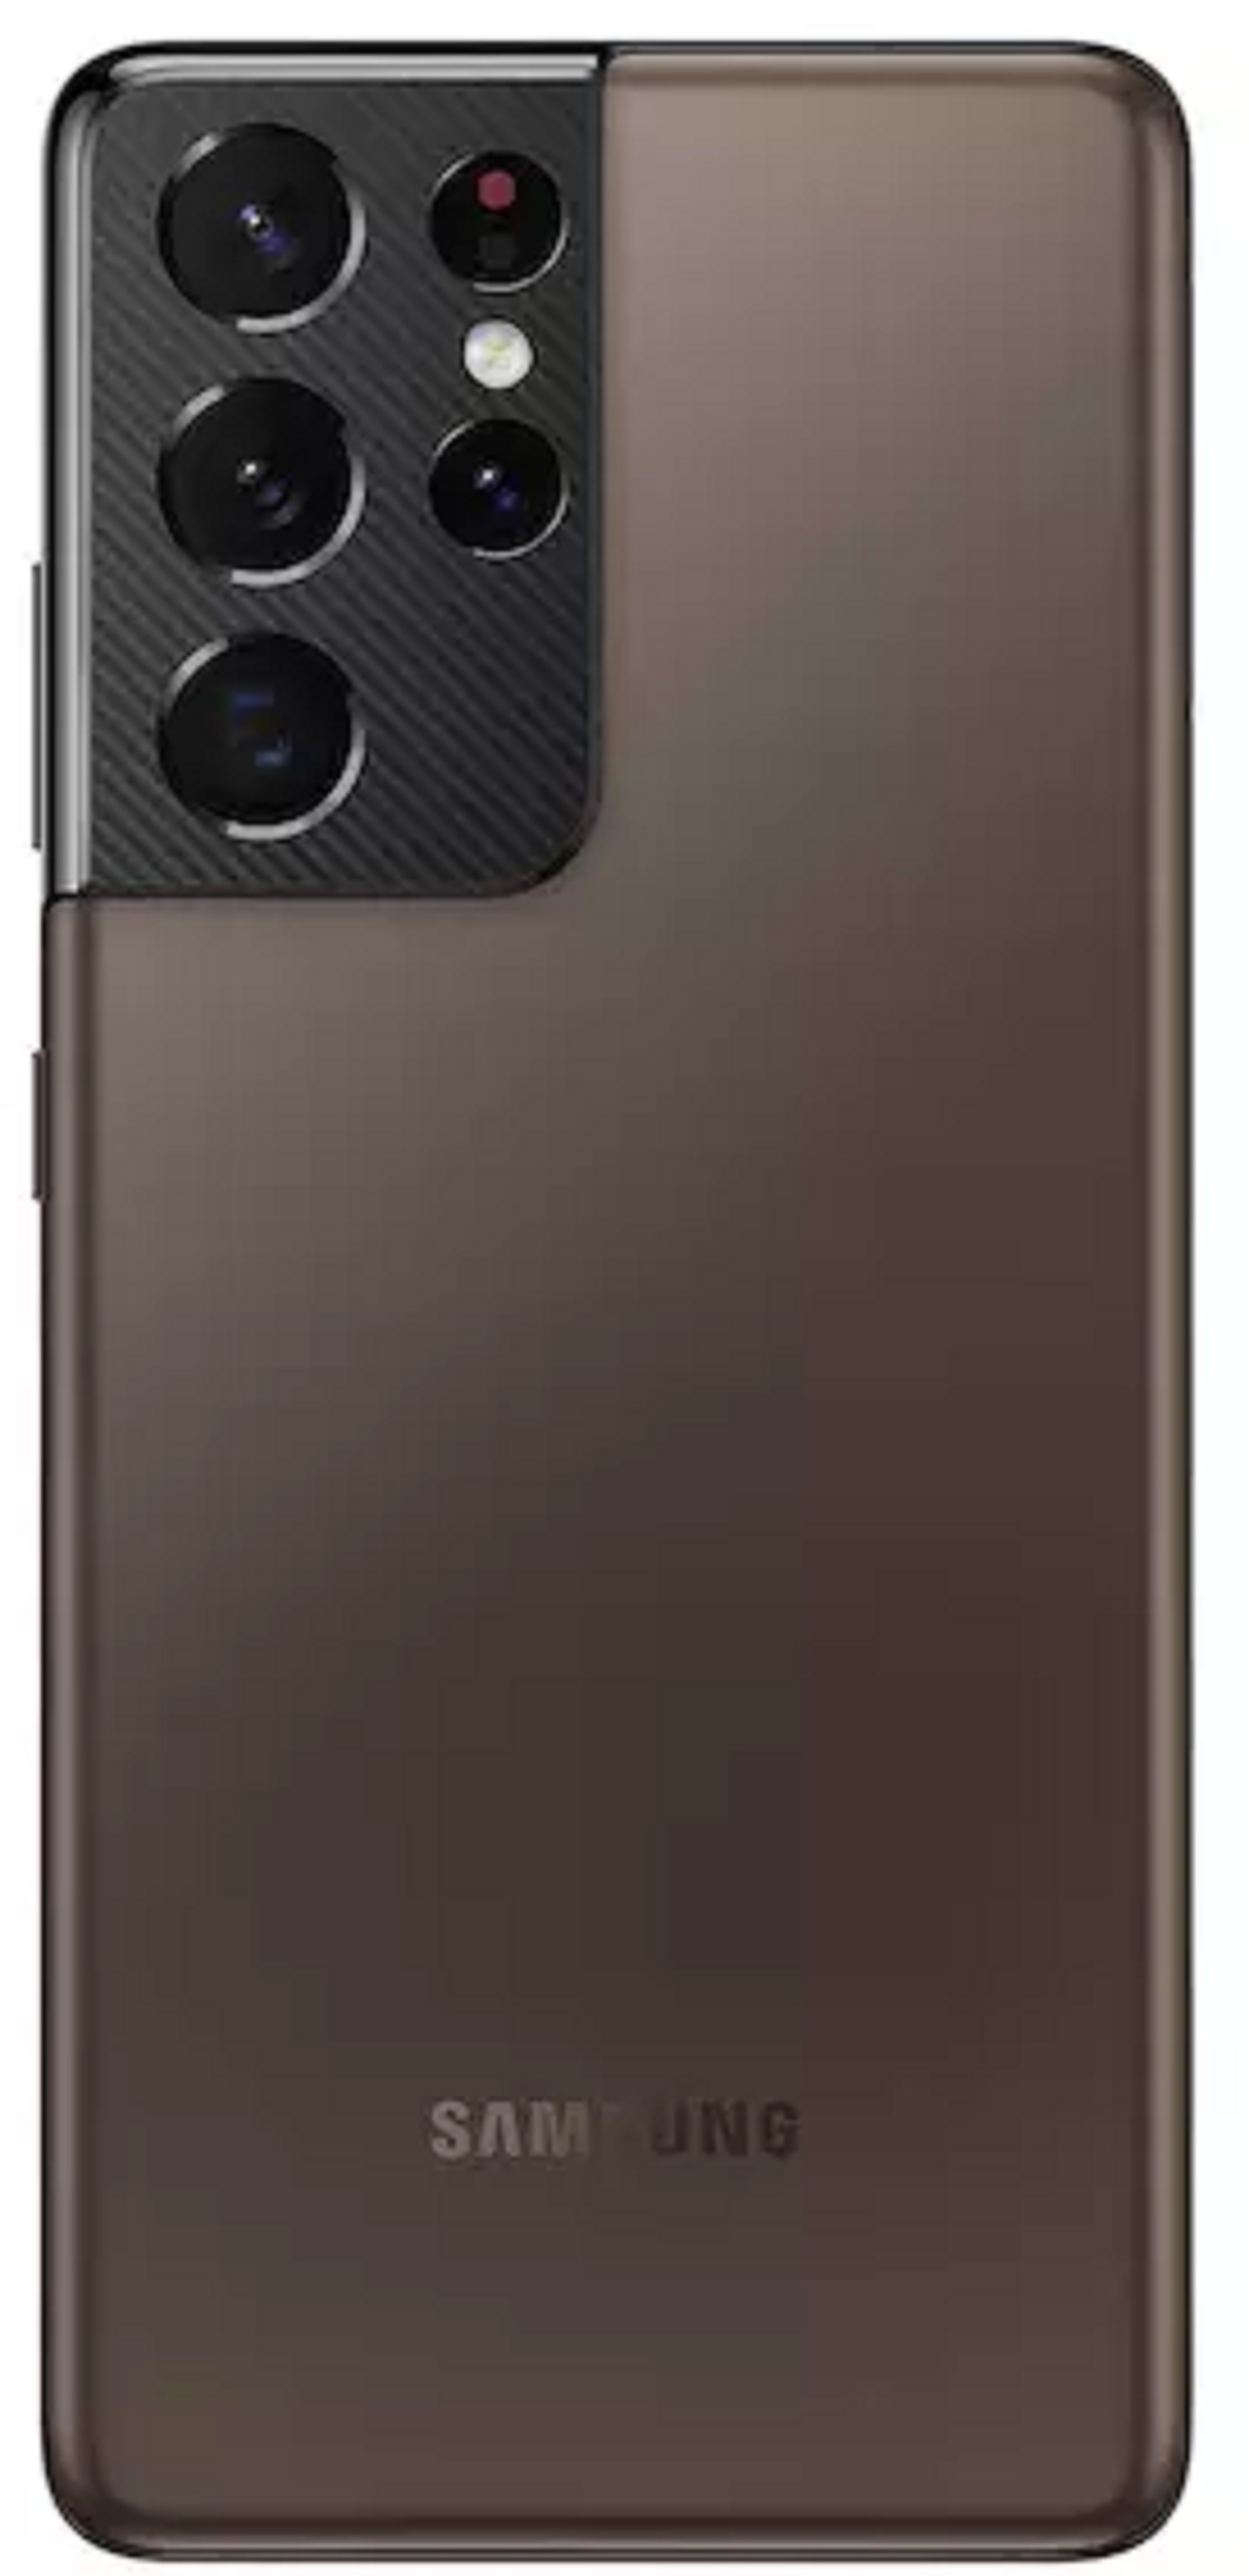 Open Box Samsung Galaxy S21 Ultra 5G SM-G998U1 128GB Bronze (US Model) - Factory Unlocked Cell Phone - image 3 of 4